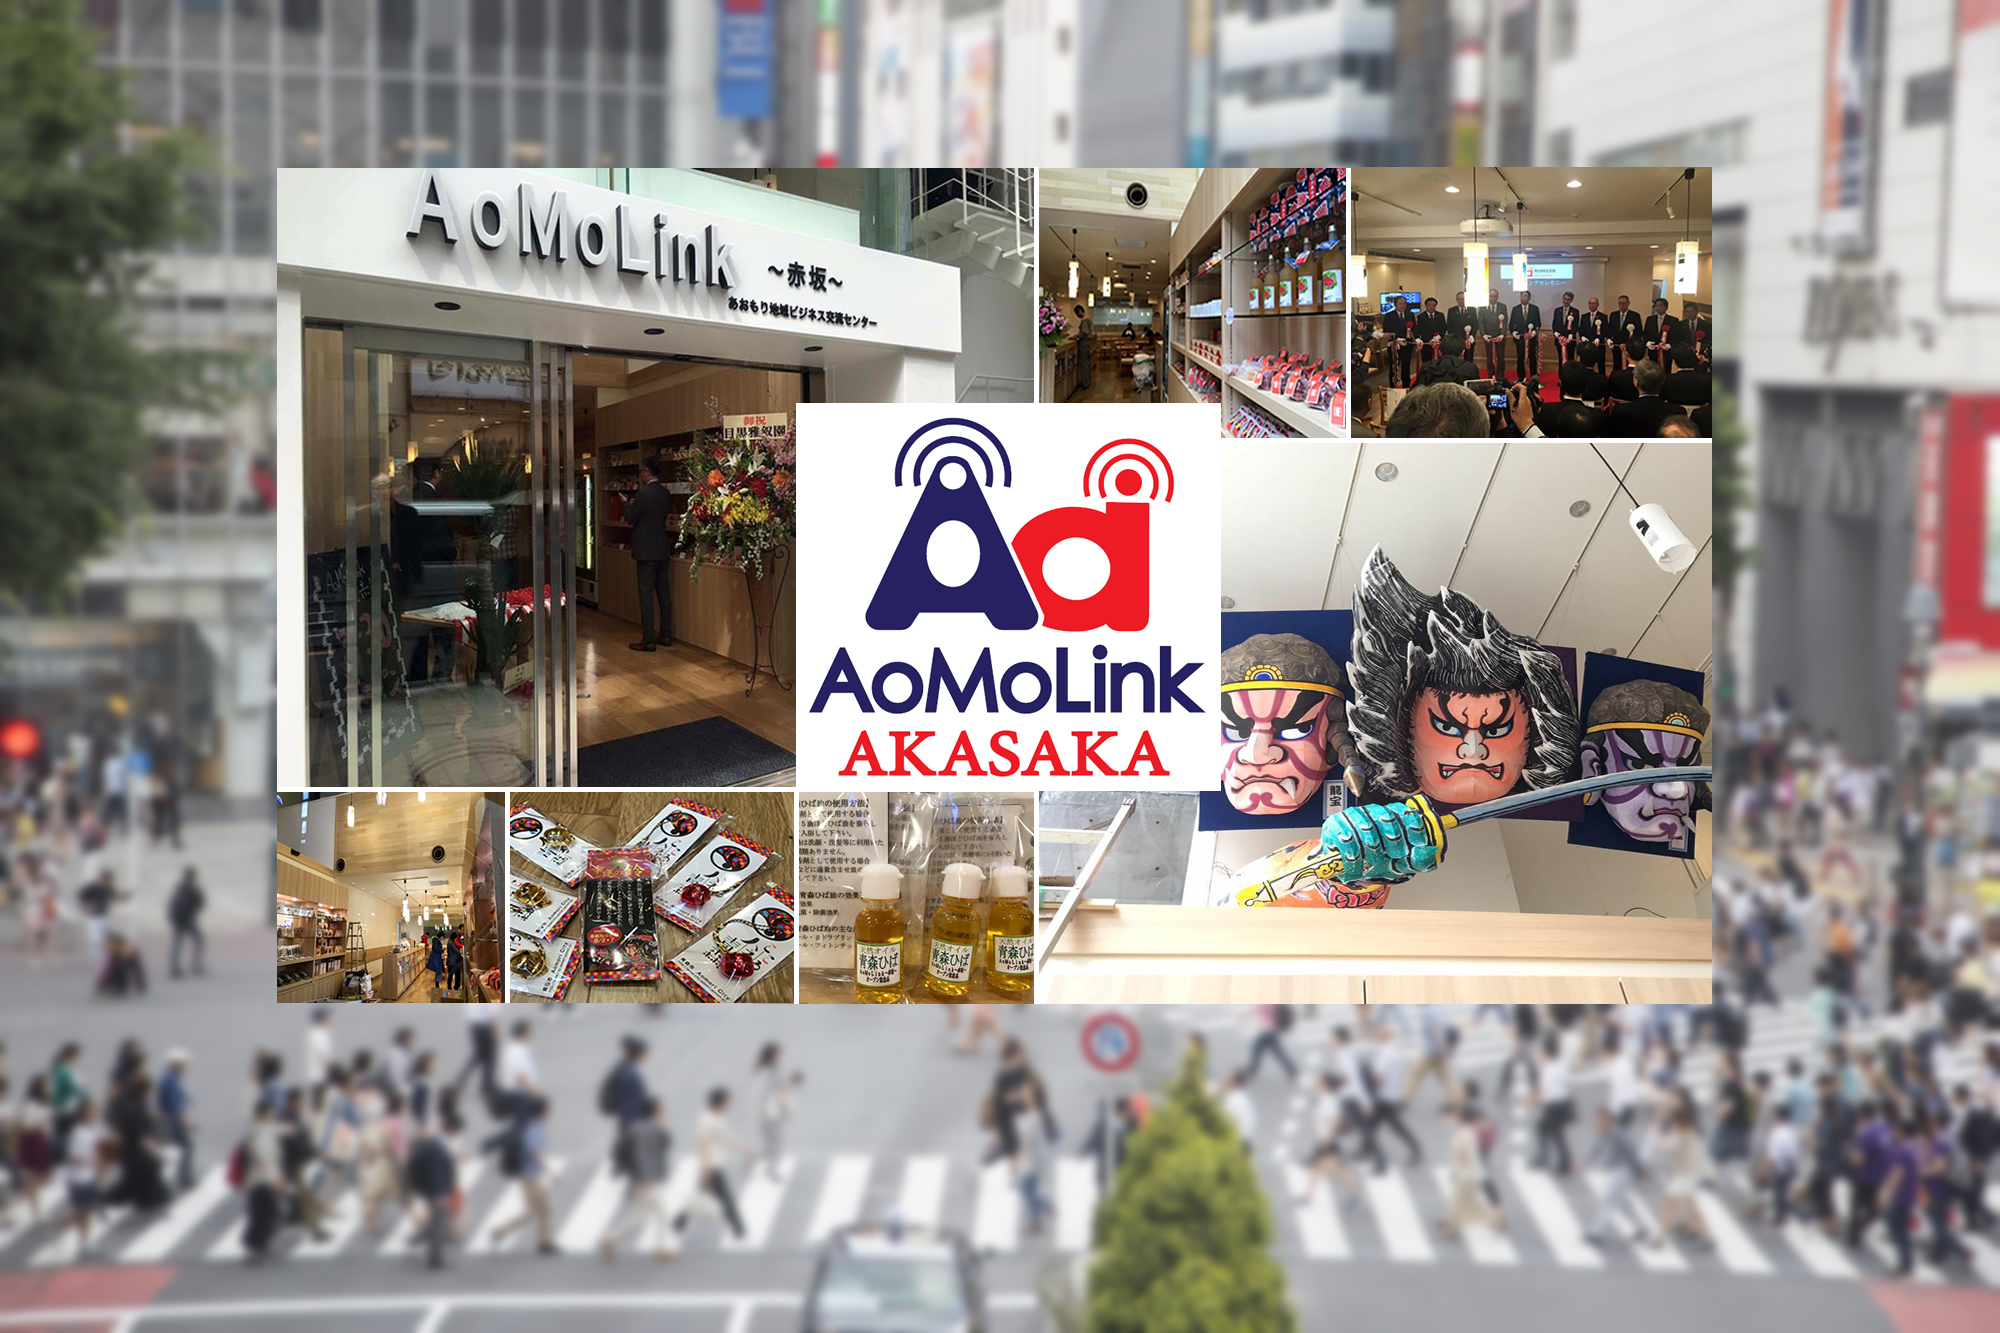 aomolinktop2 - AoMoLink〜赤坂〜の第2回勉強会&交流会開催します。